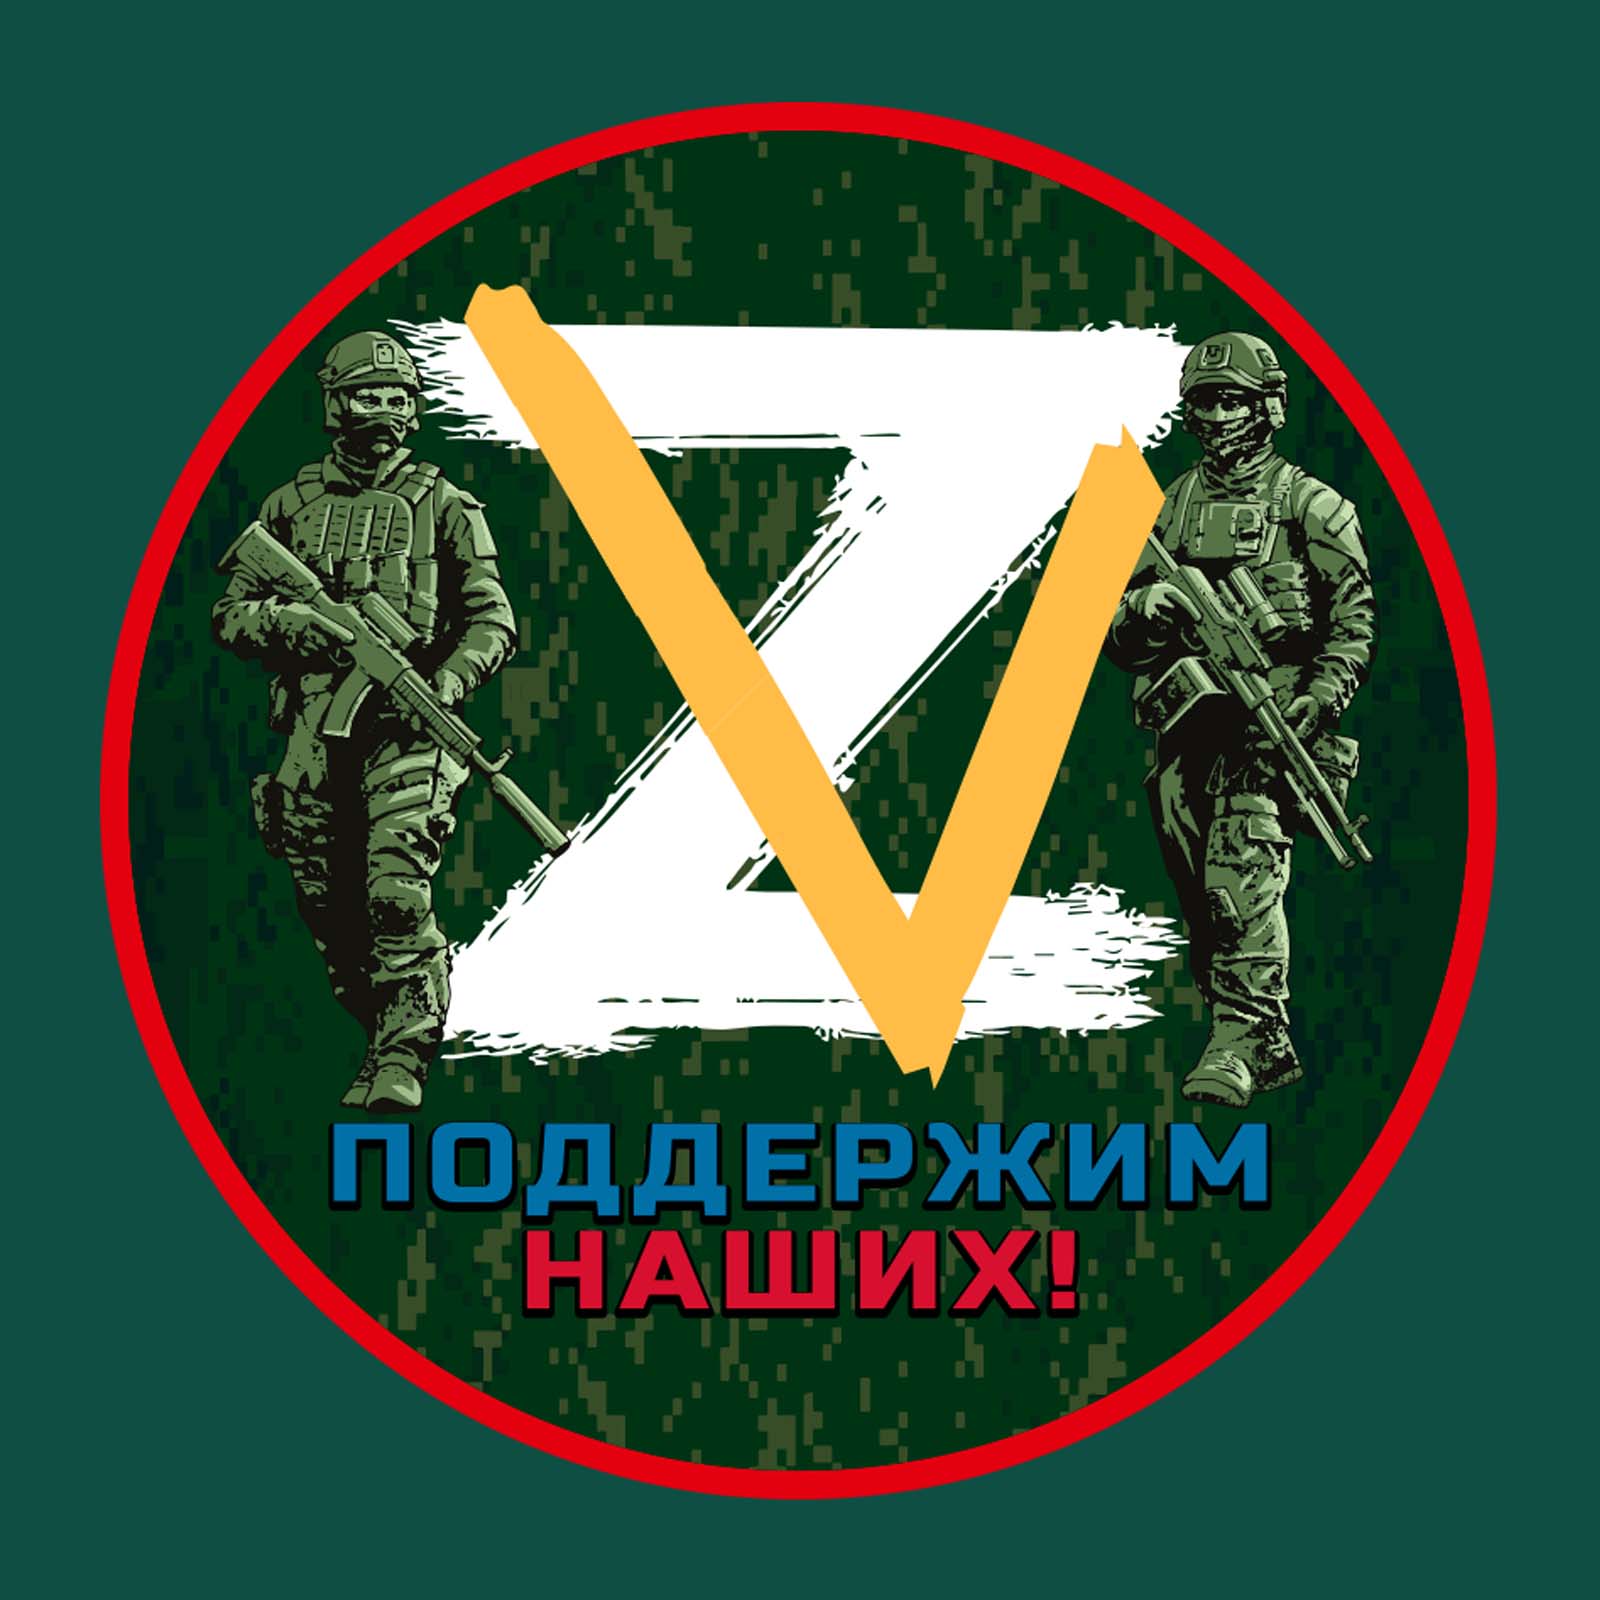 Символика Z V недорого: футболки, кепки, фляжки, флаги 